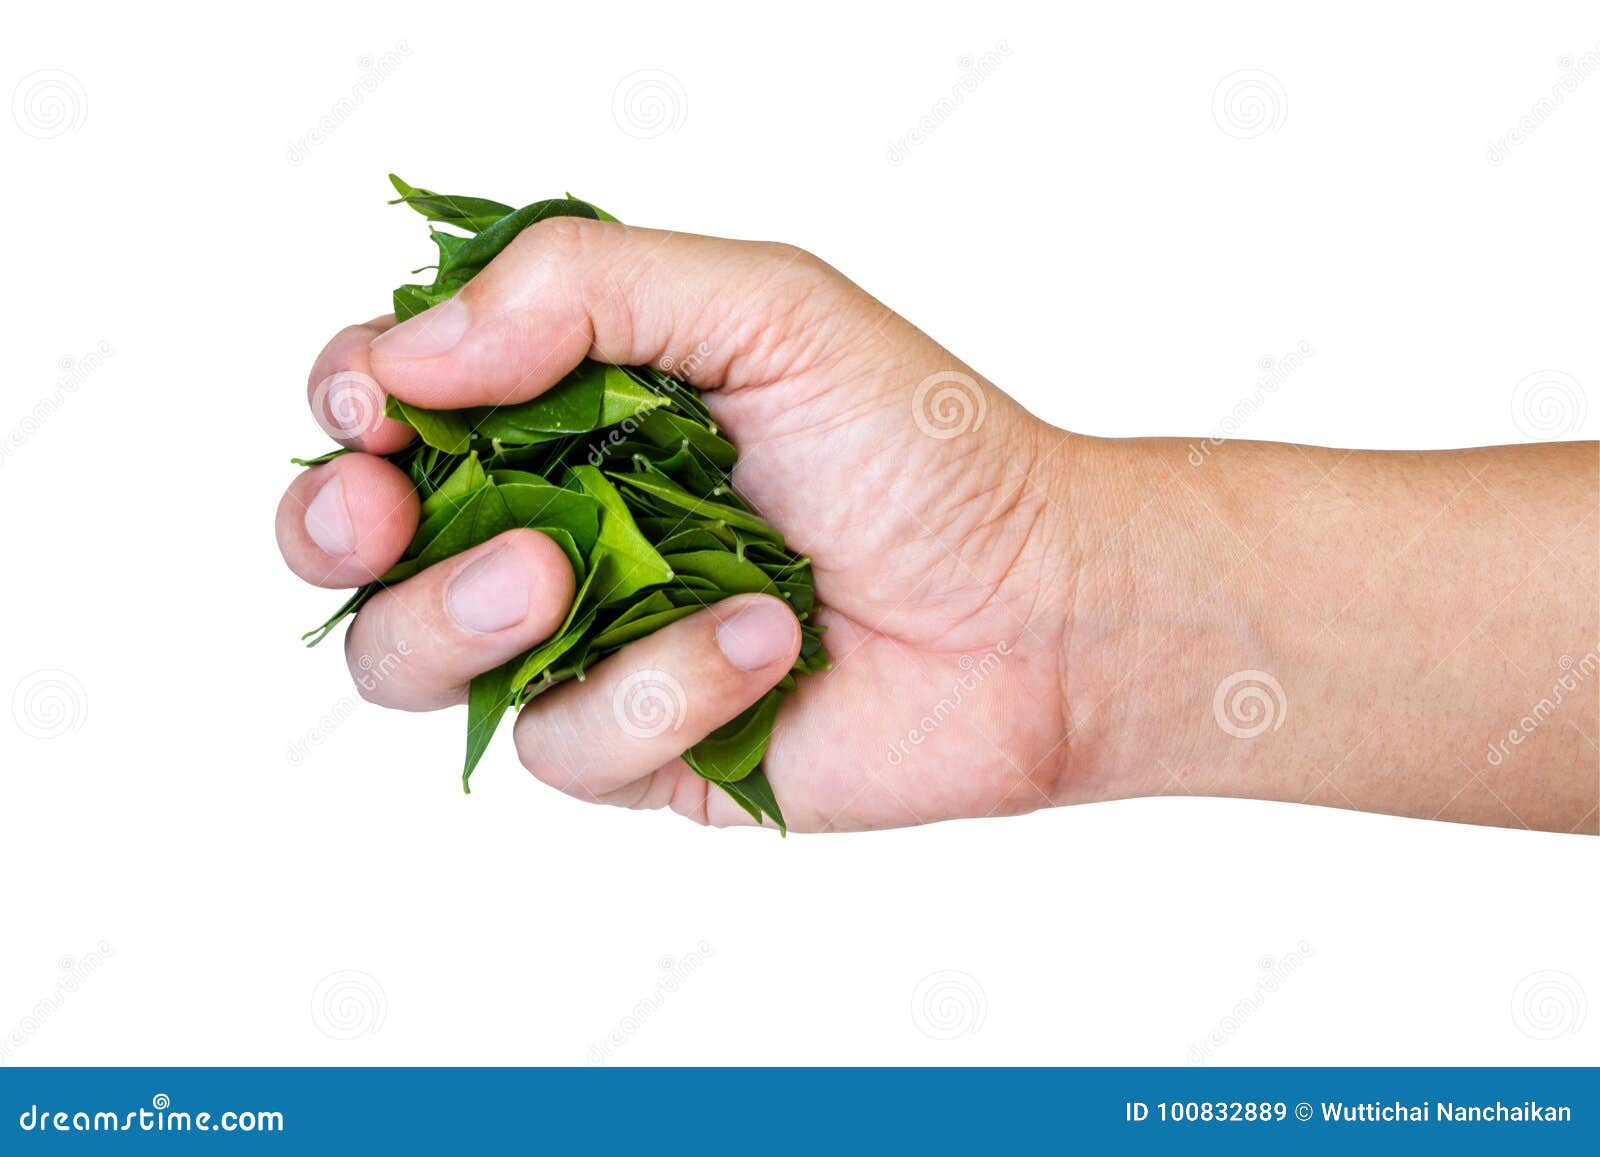 Hand holding leaf stock image. Image of stack, pick - 100832889